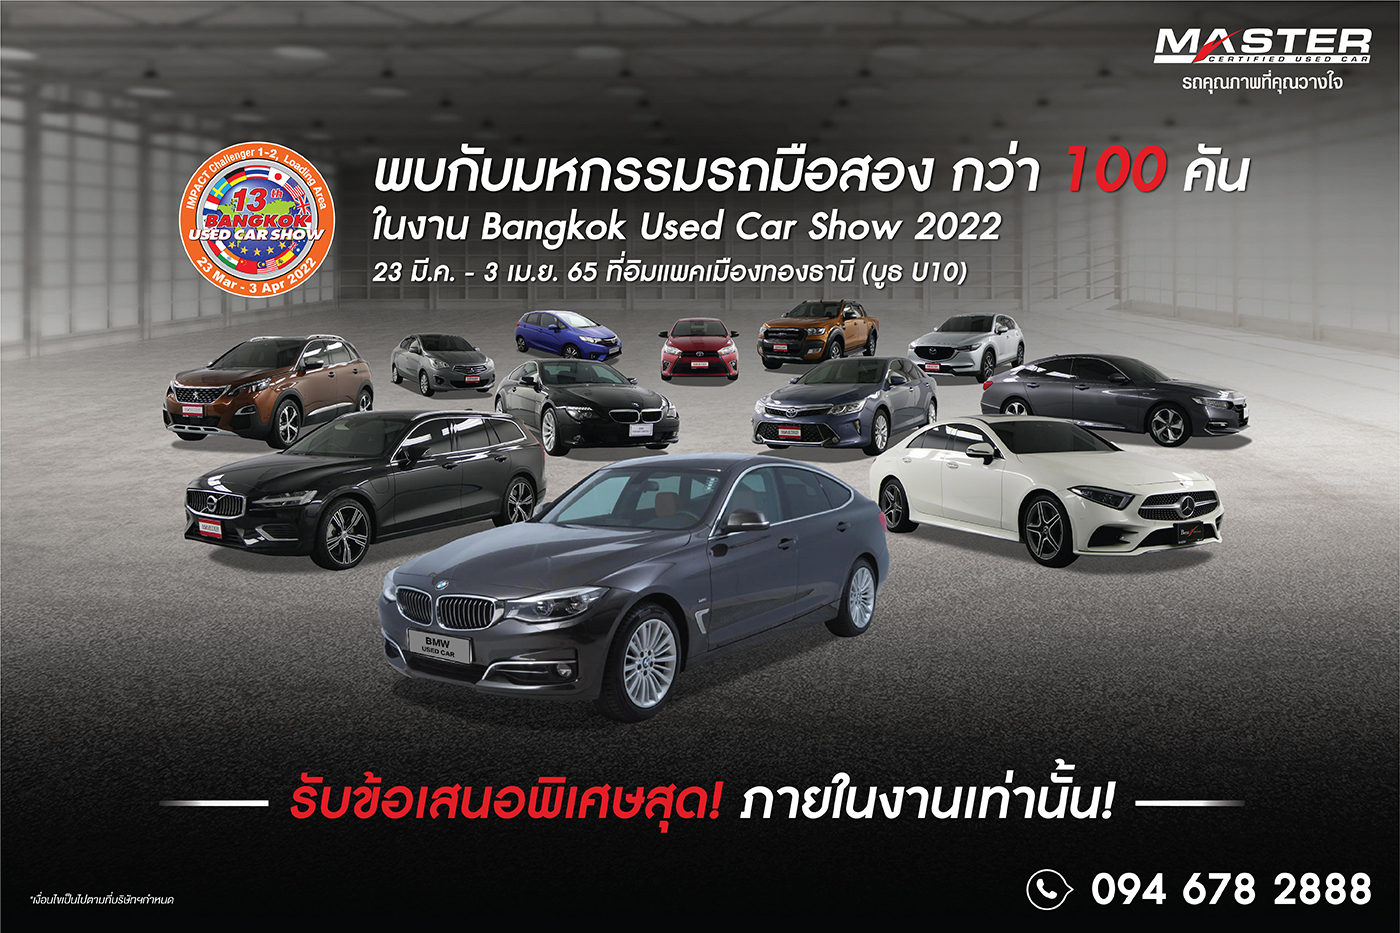 Bangkok Used Car Show 2022 มหกรรมรถมือสองคุณภาพ กว่า 100 คัน กับข้อเสนอพิเศษสุดๆ 